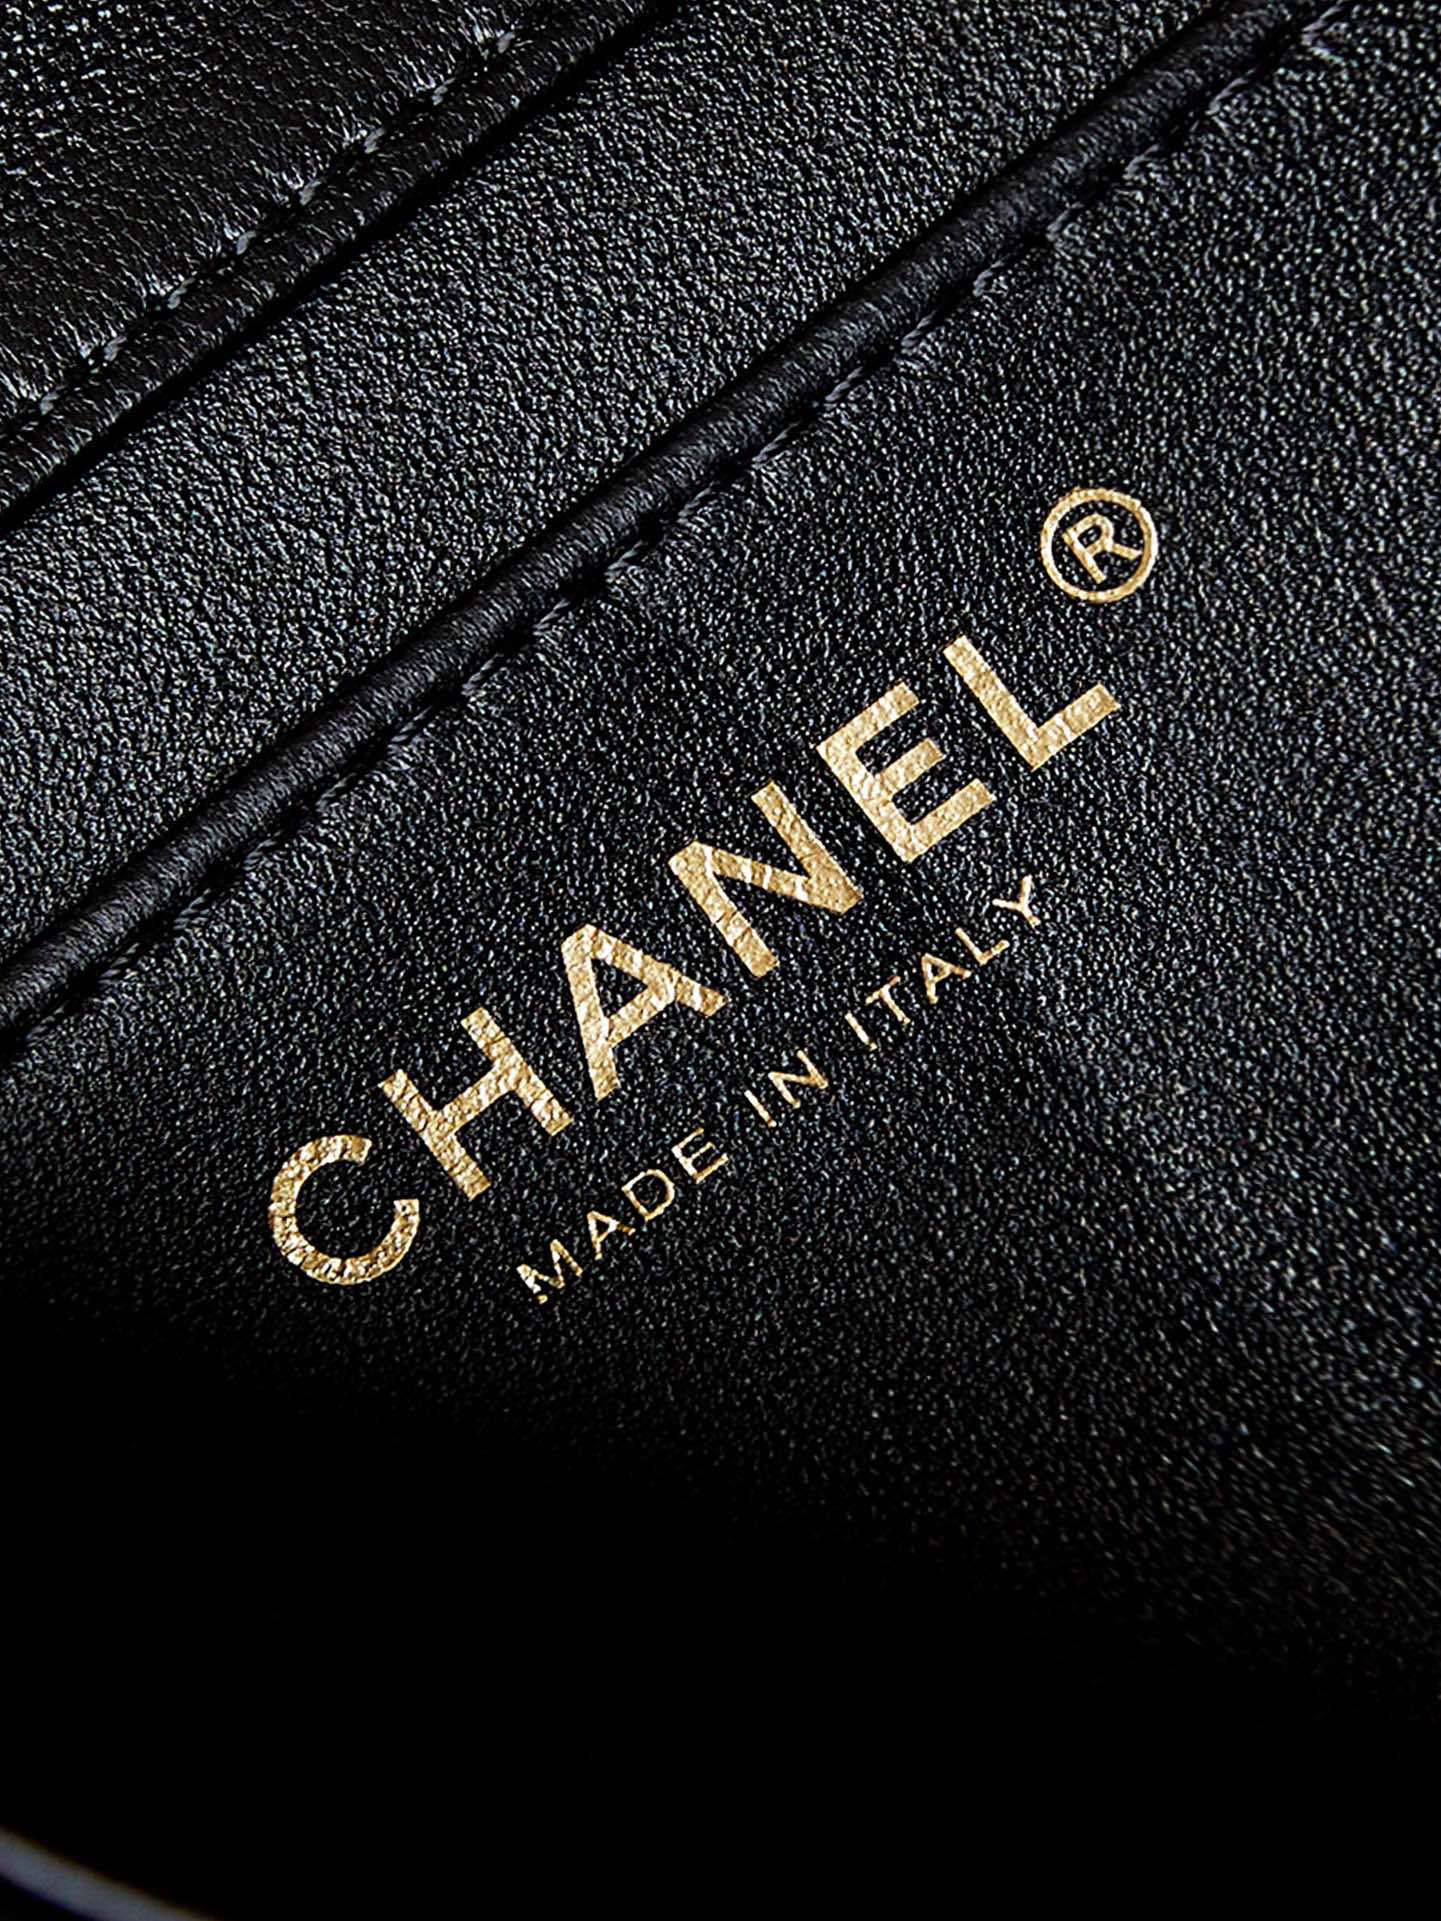 Chanel MINI FLAP BAG AS4385 black